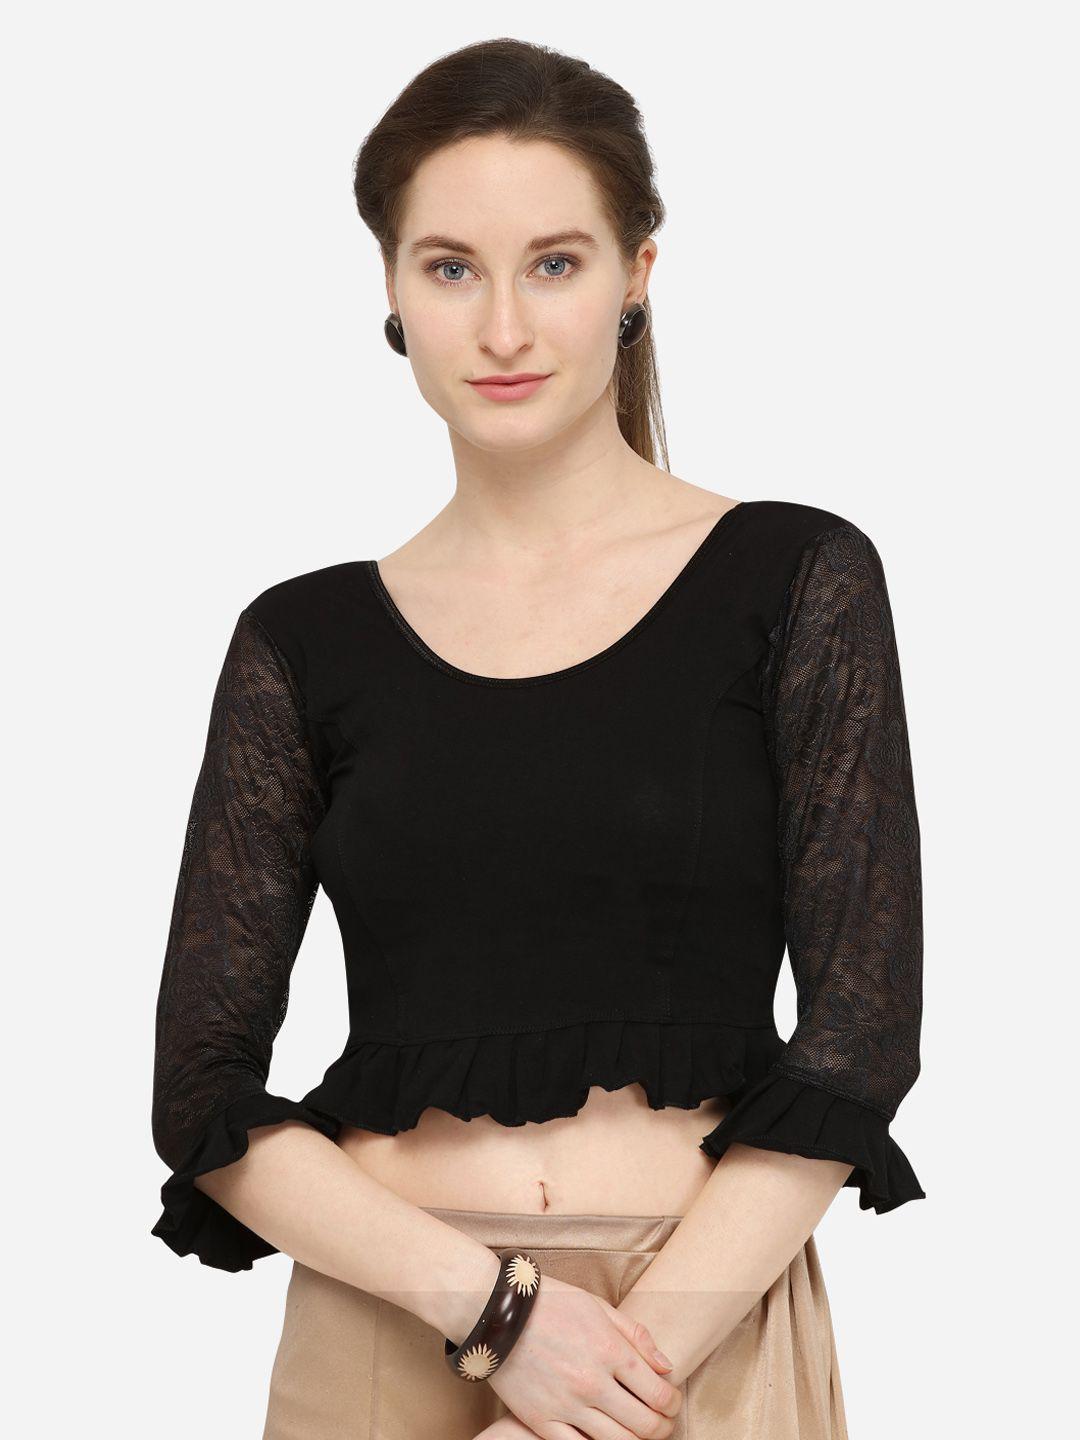 inddus women black solid saree blouse